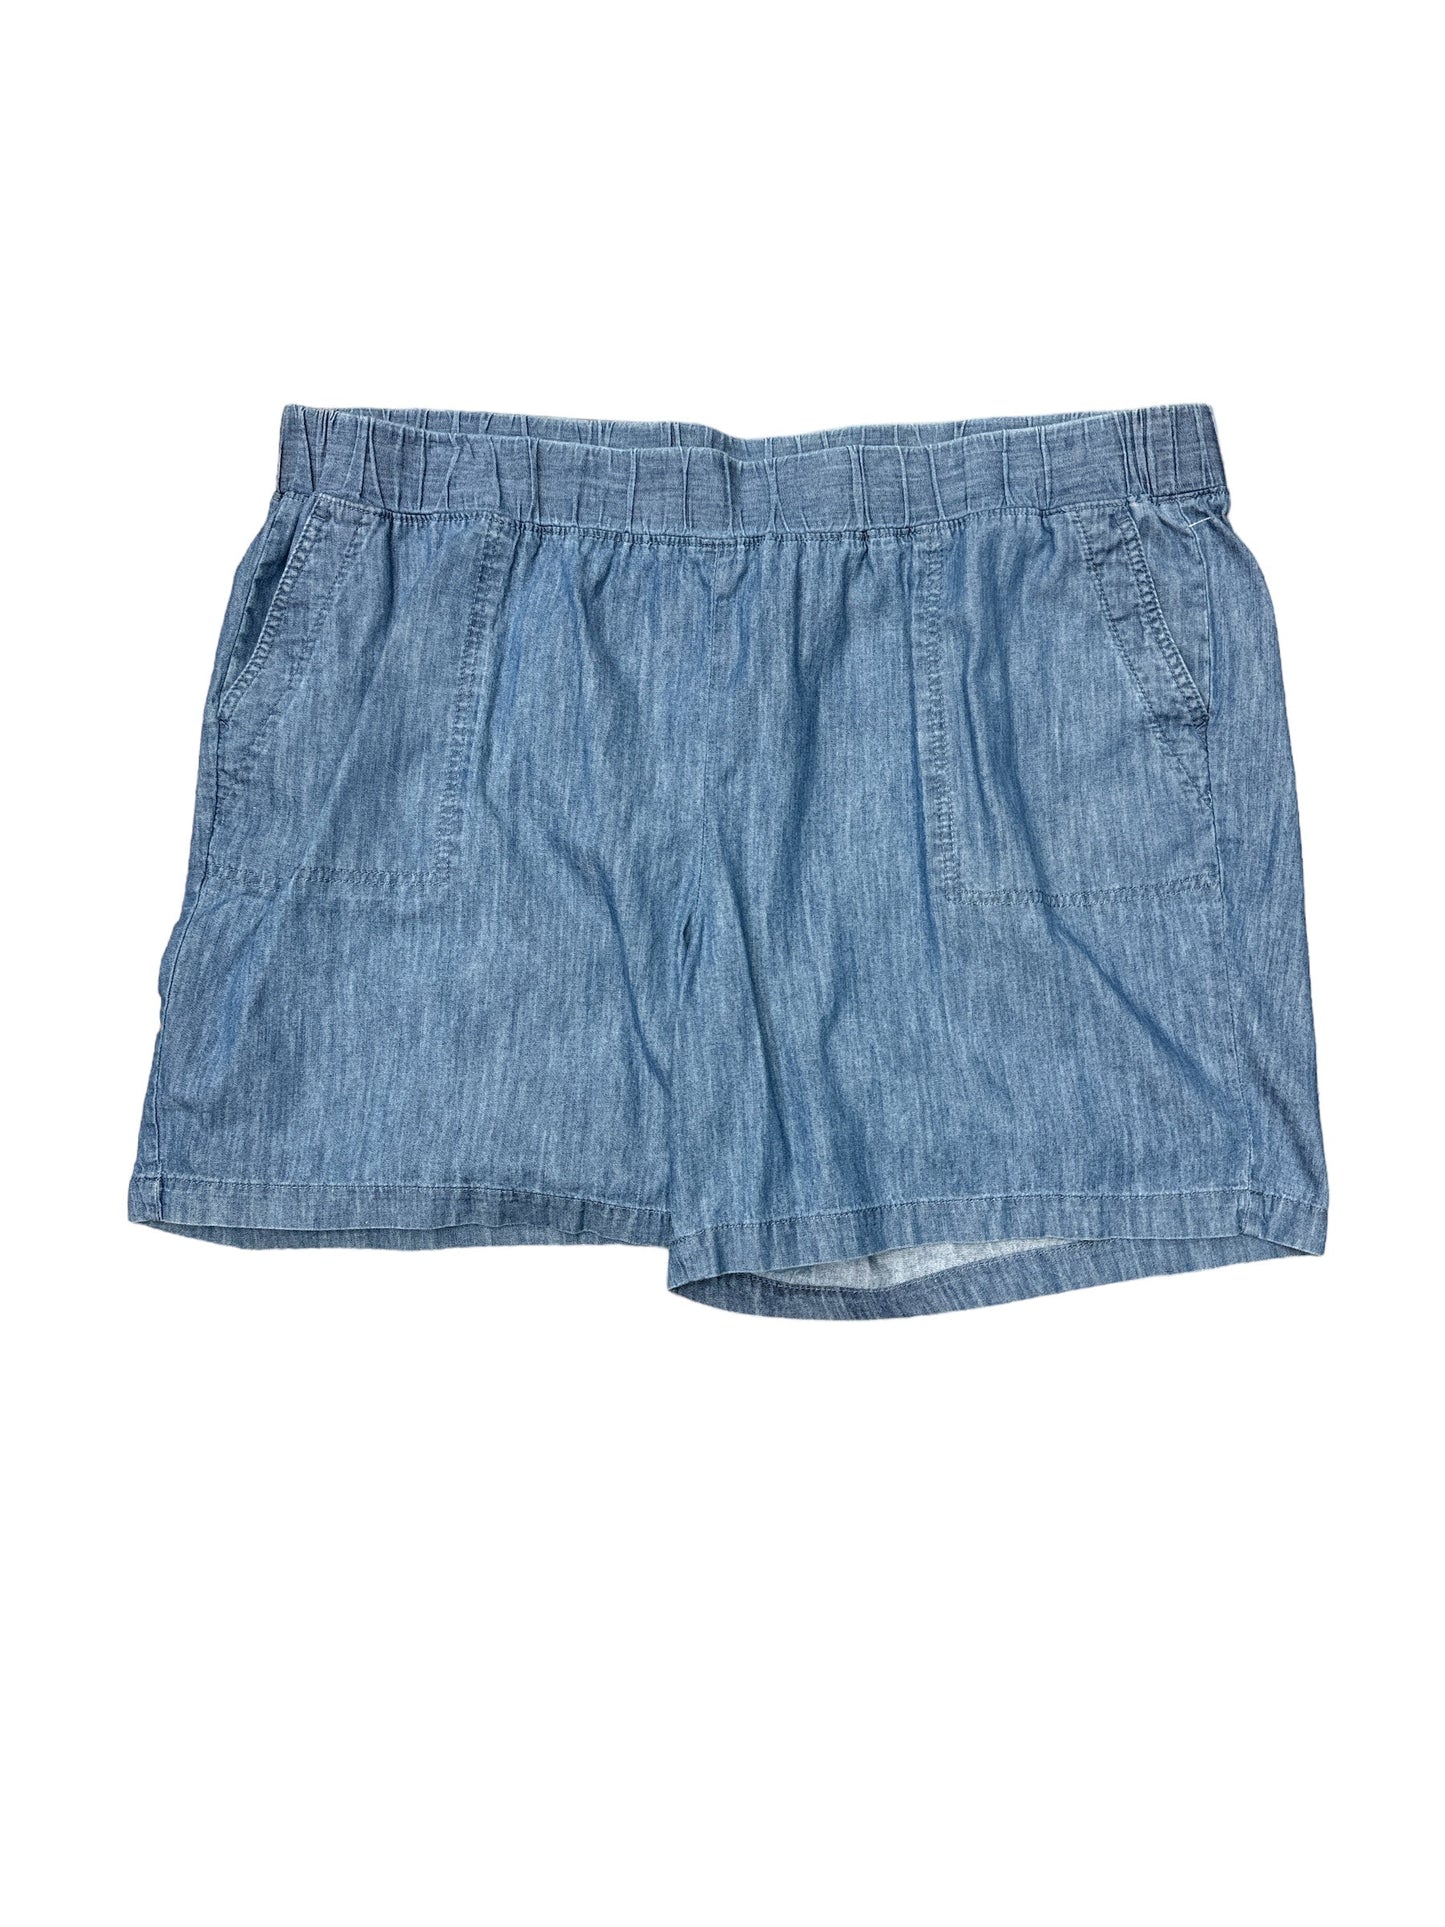 Shorts By Talbots  Size: 22